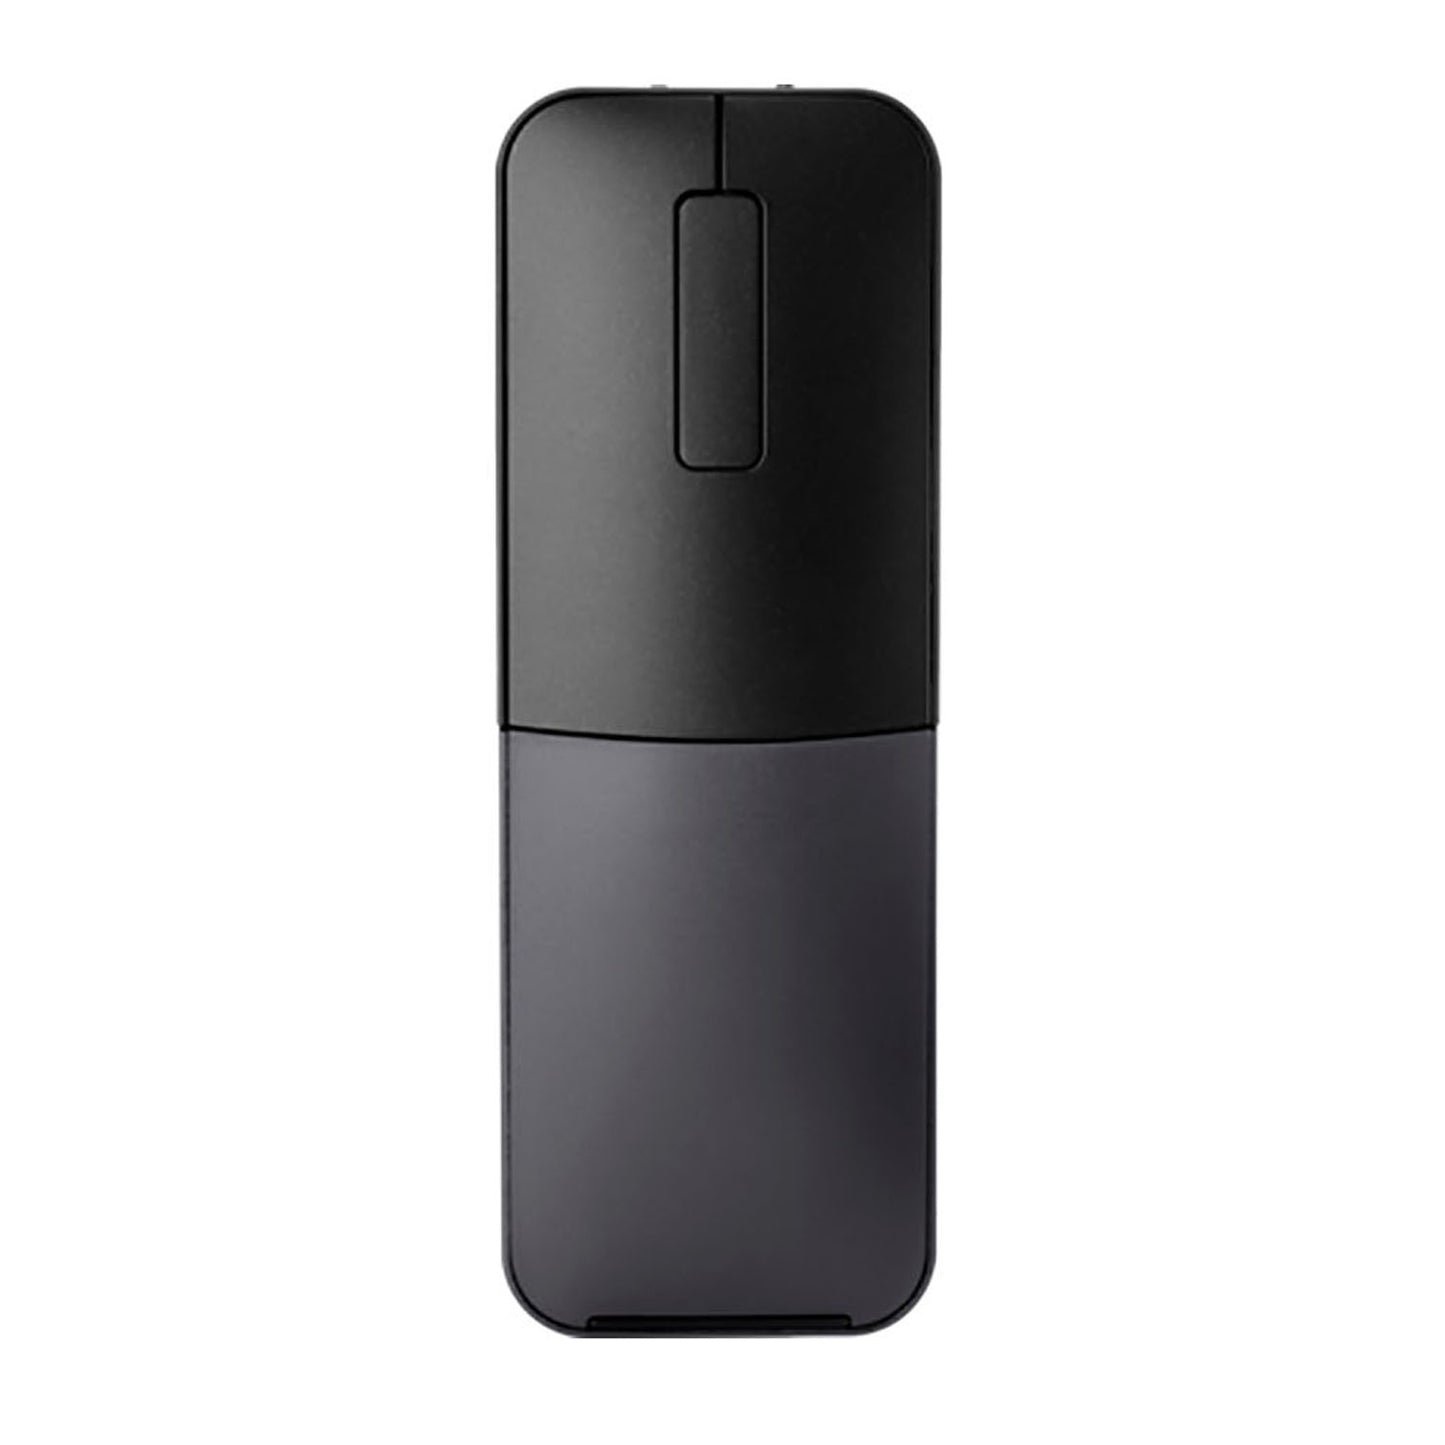 HP Elite Presenter Stick and Mouse Combo (Black)